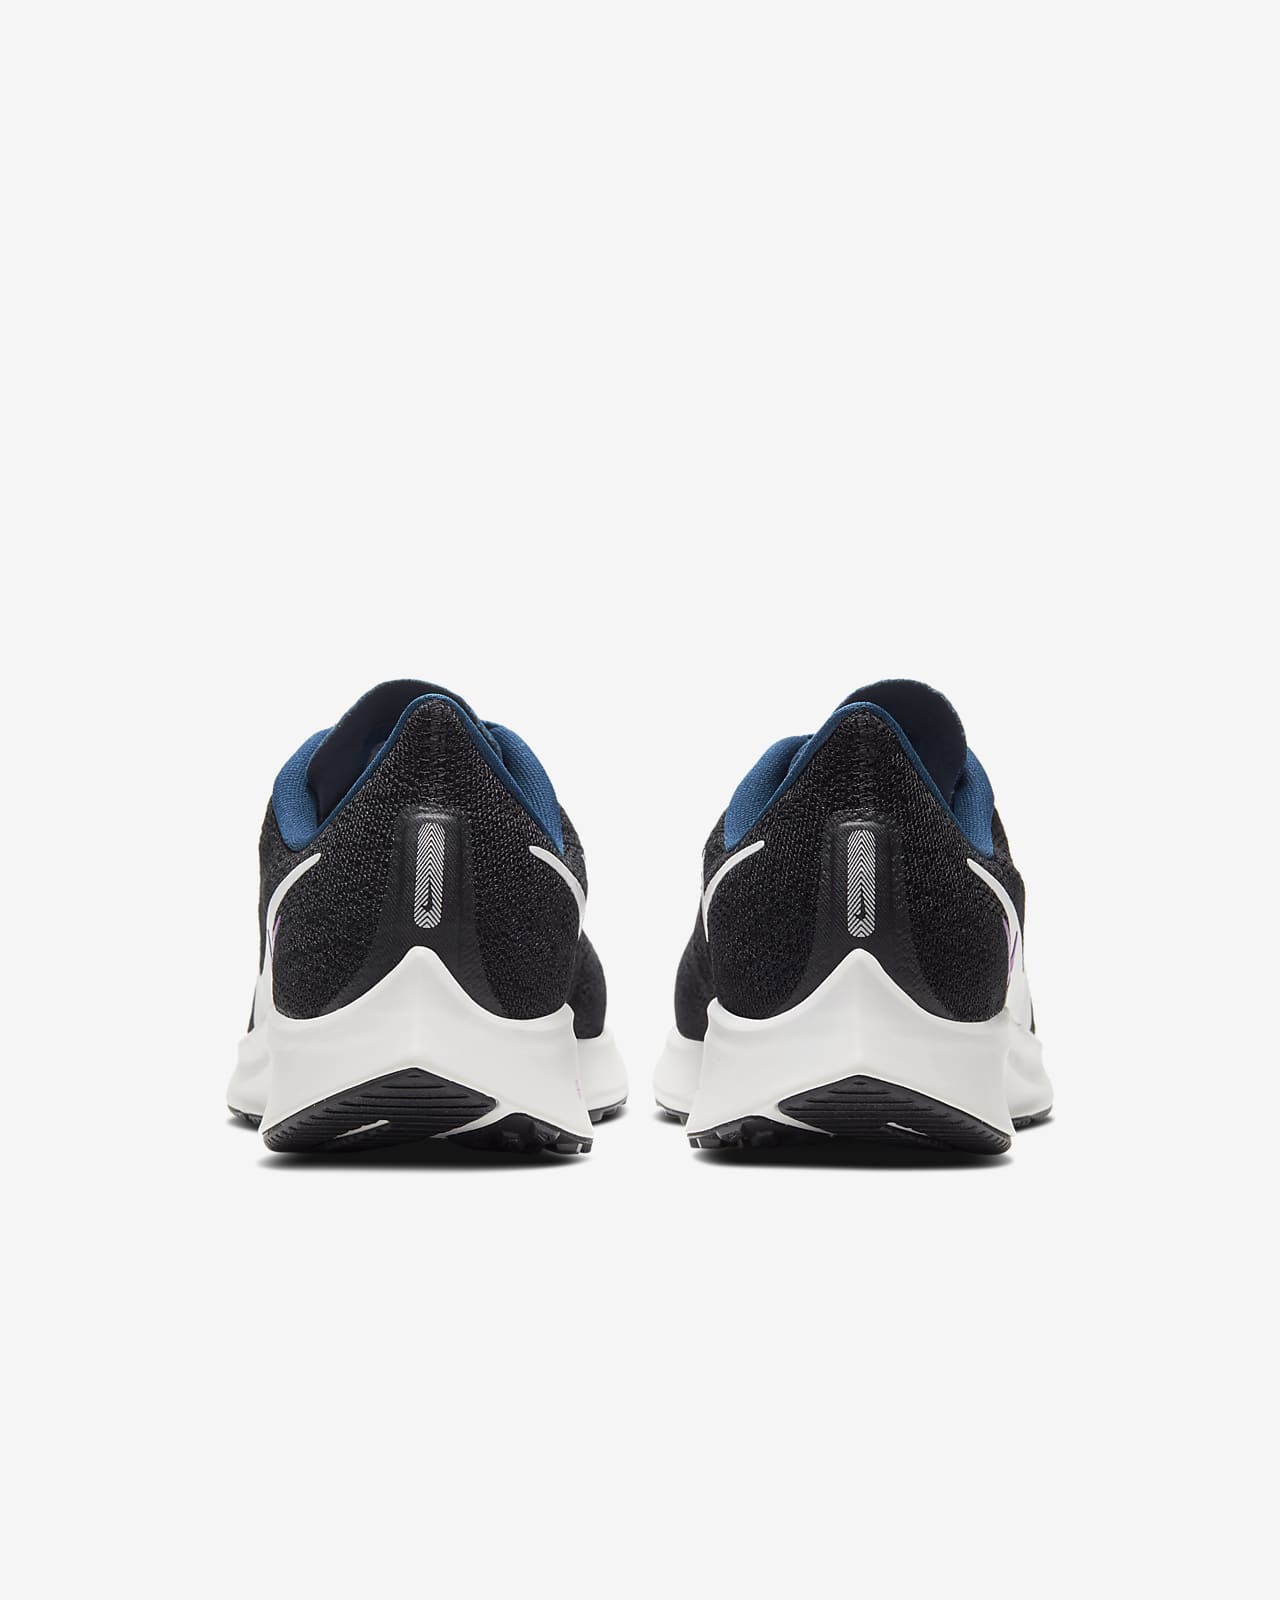 nike blue grey running shoes